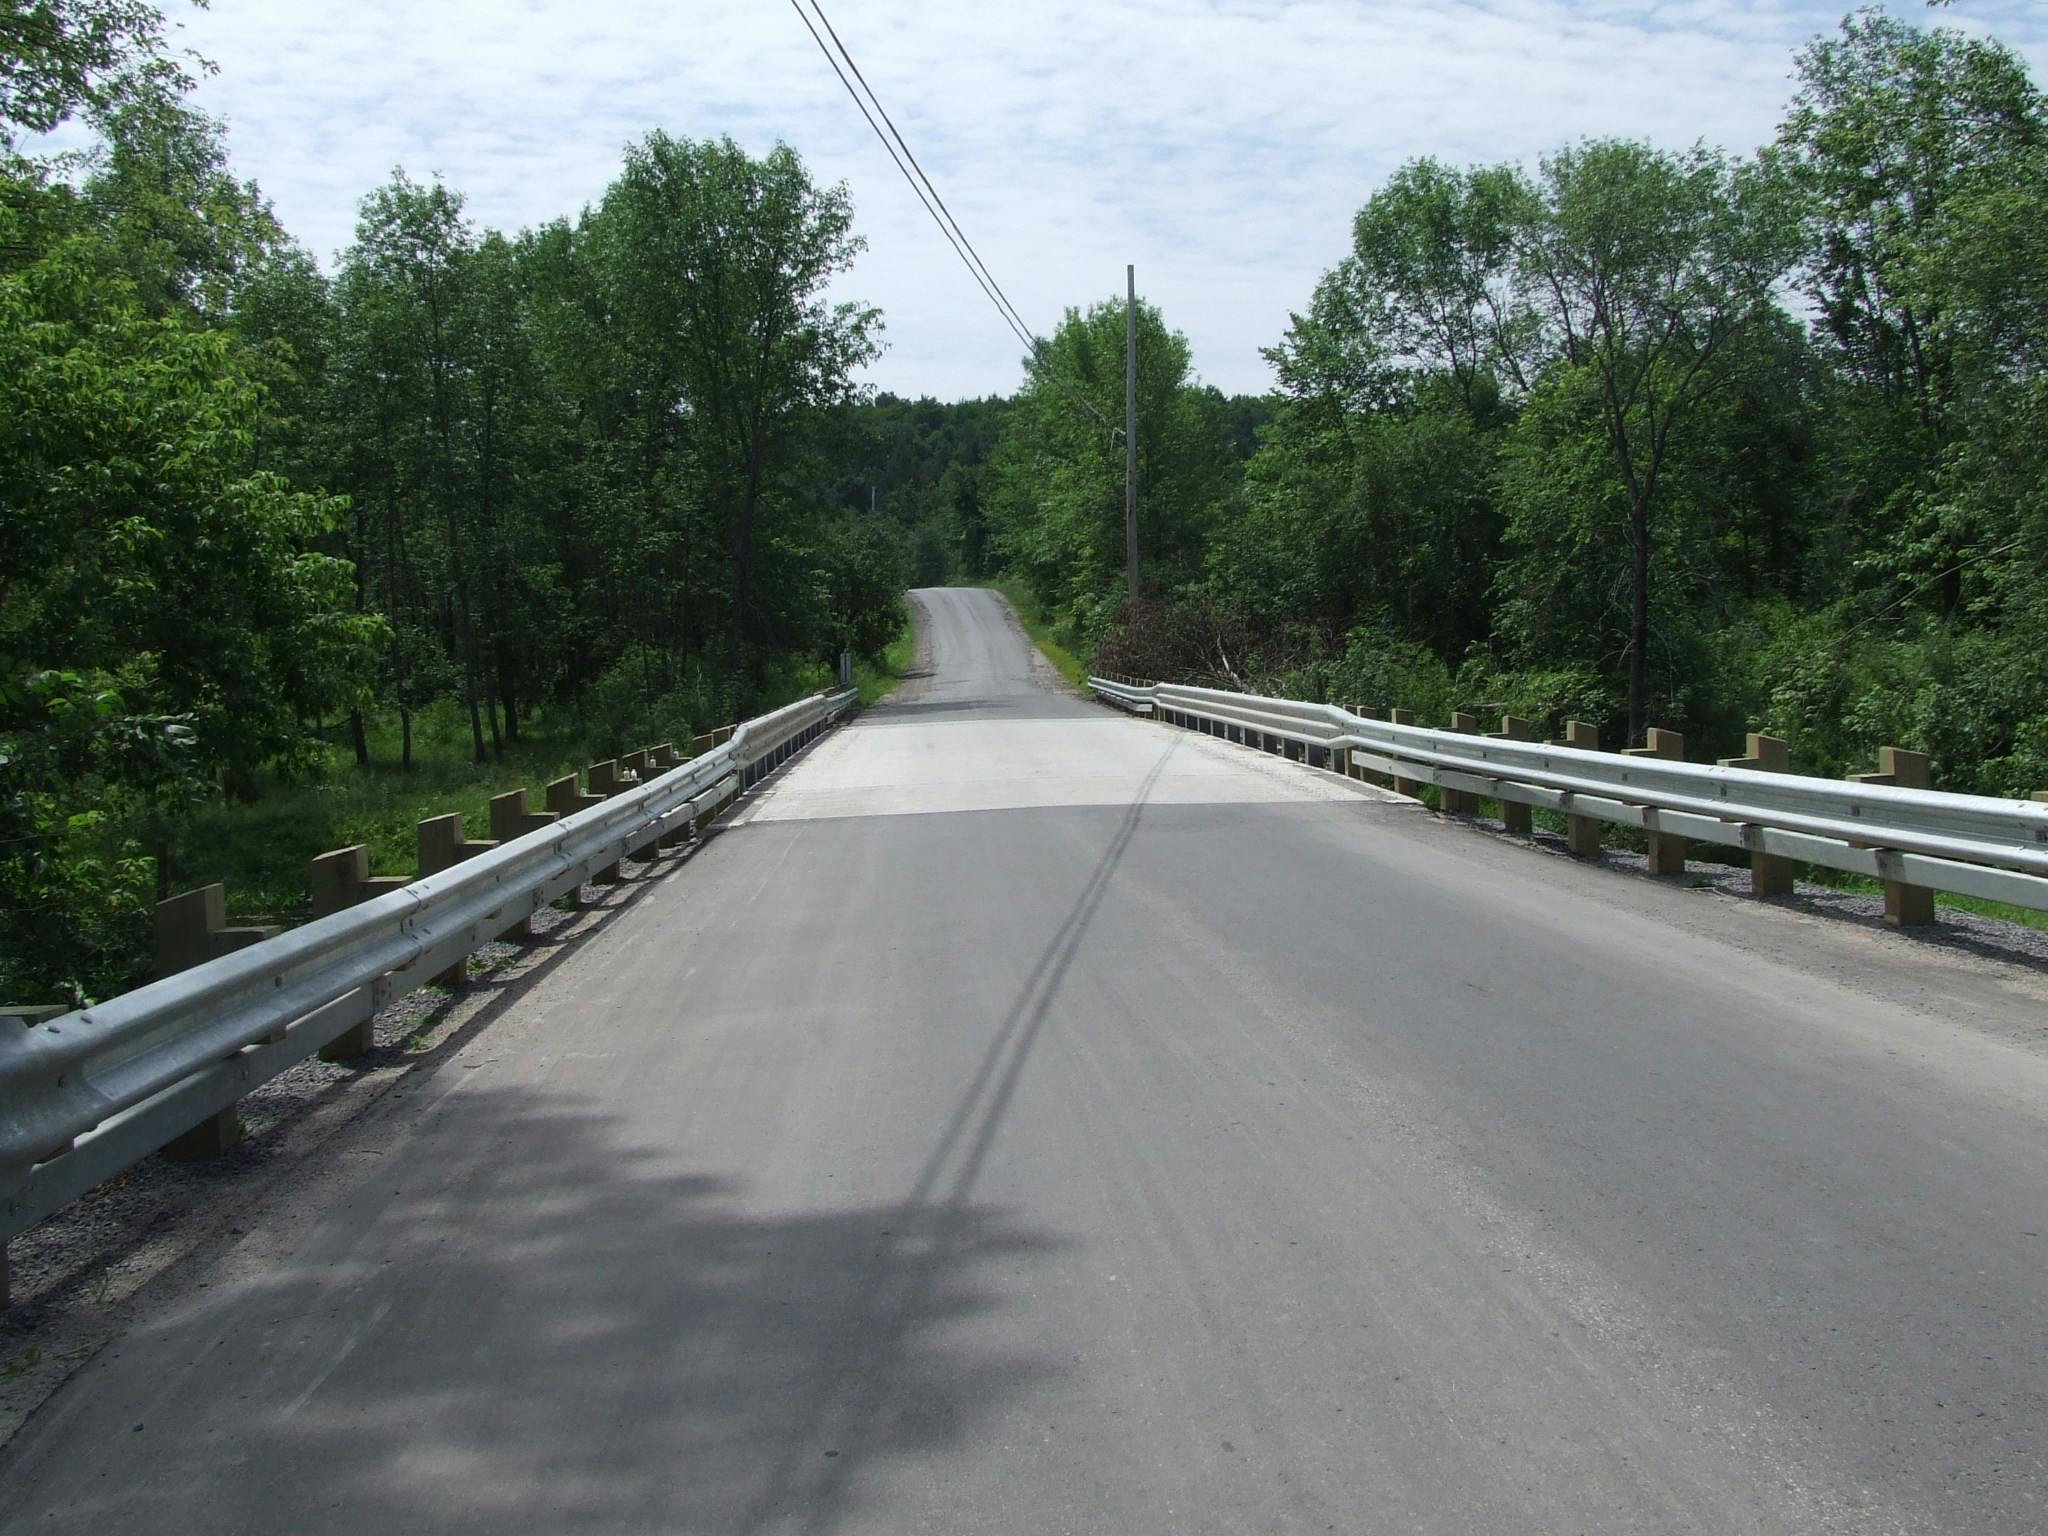 Photo 5: Example of new bridge in rural setting